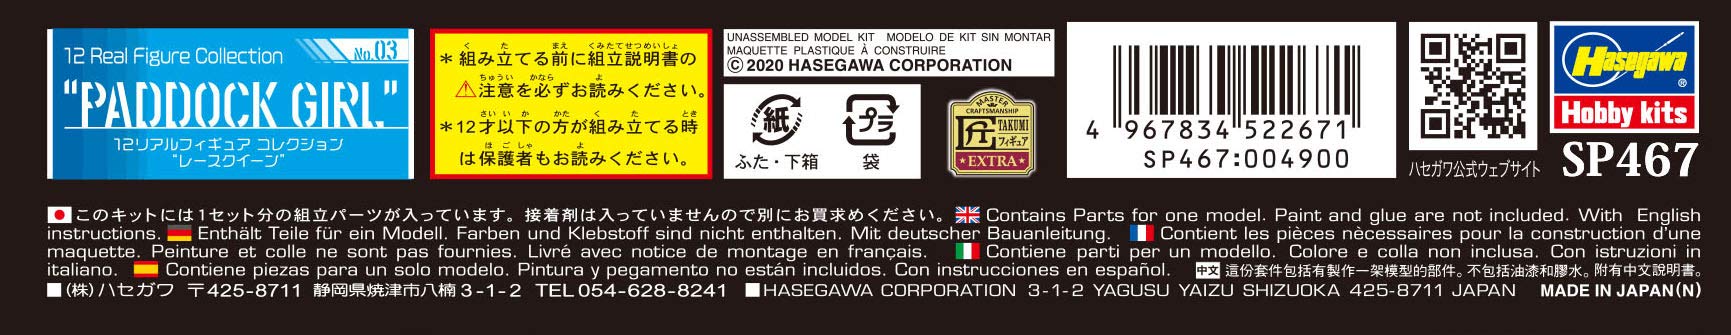 Hasegawa 1/12  Real Figure Collection No.03 PADDOCK GIRL Model kit SP467 NEW_8